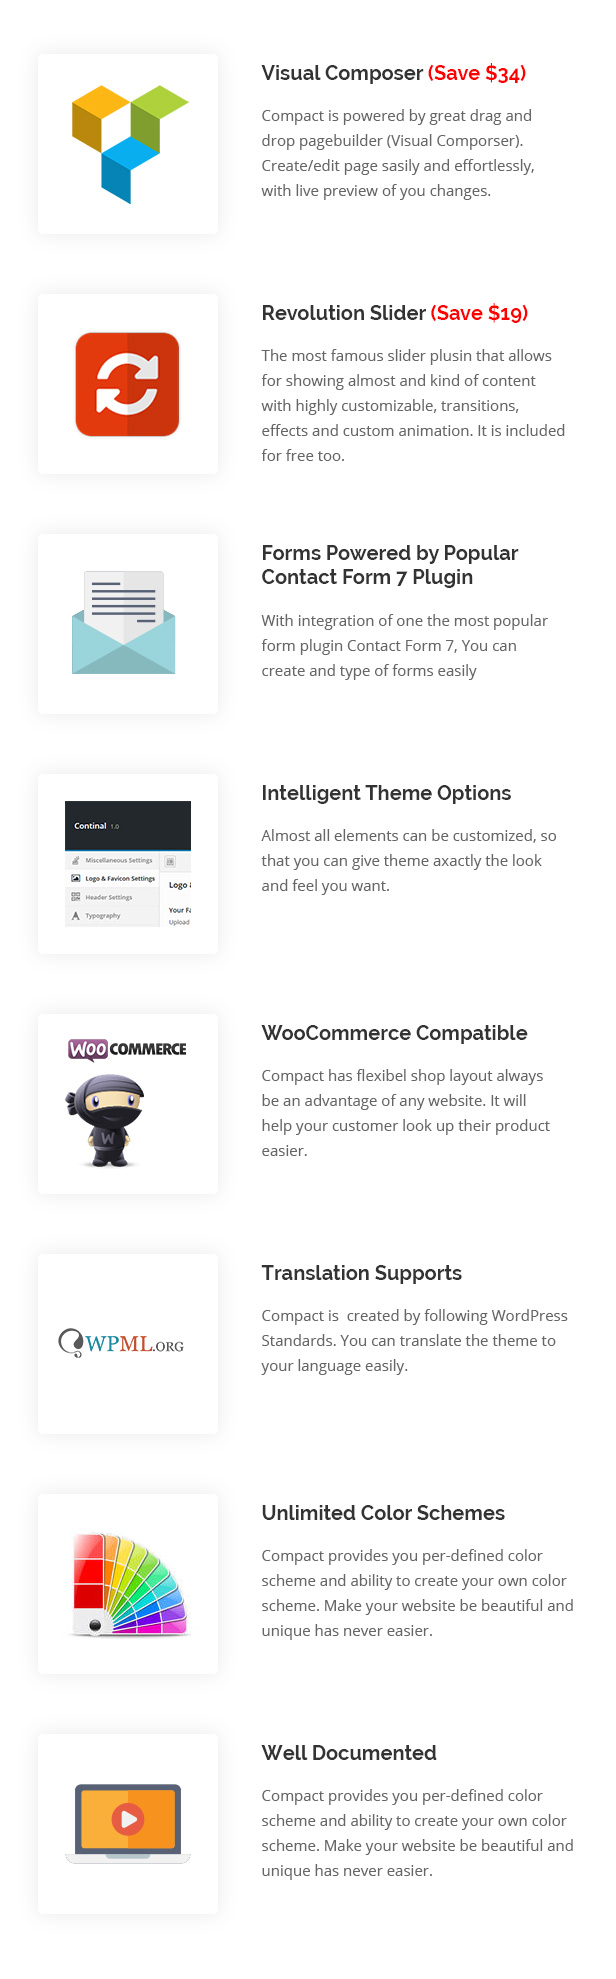 Compact - Corporate Multipurpose WordPress Theme 